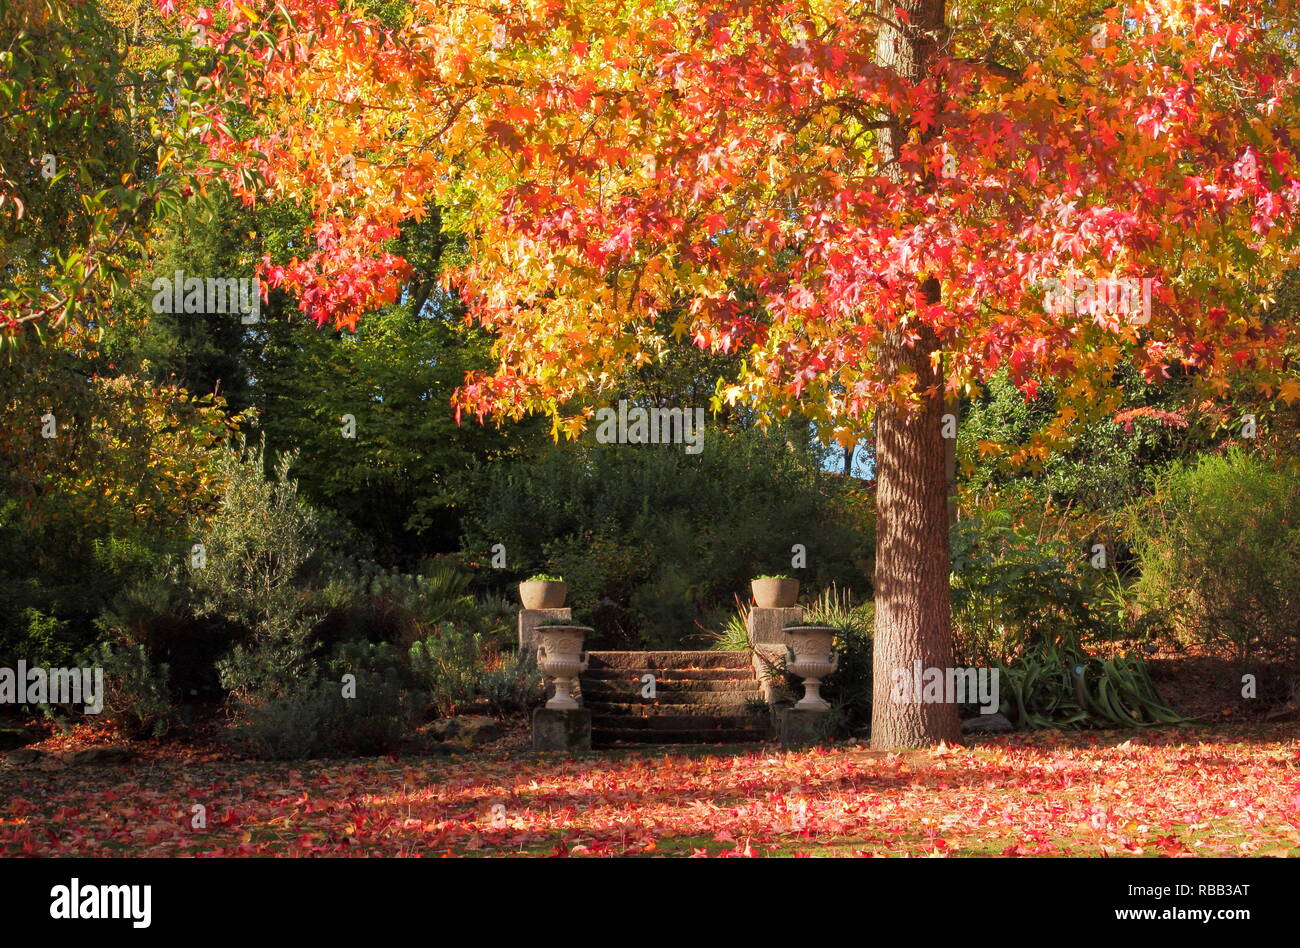 Licuidambar styraciflua. Feuillage d'automne dynamique du sweet gum tree en octobre, UK Banque D'Images